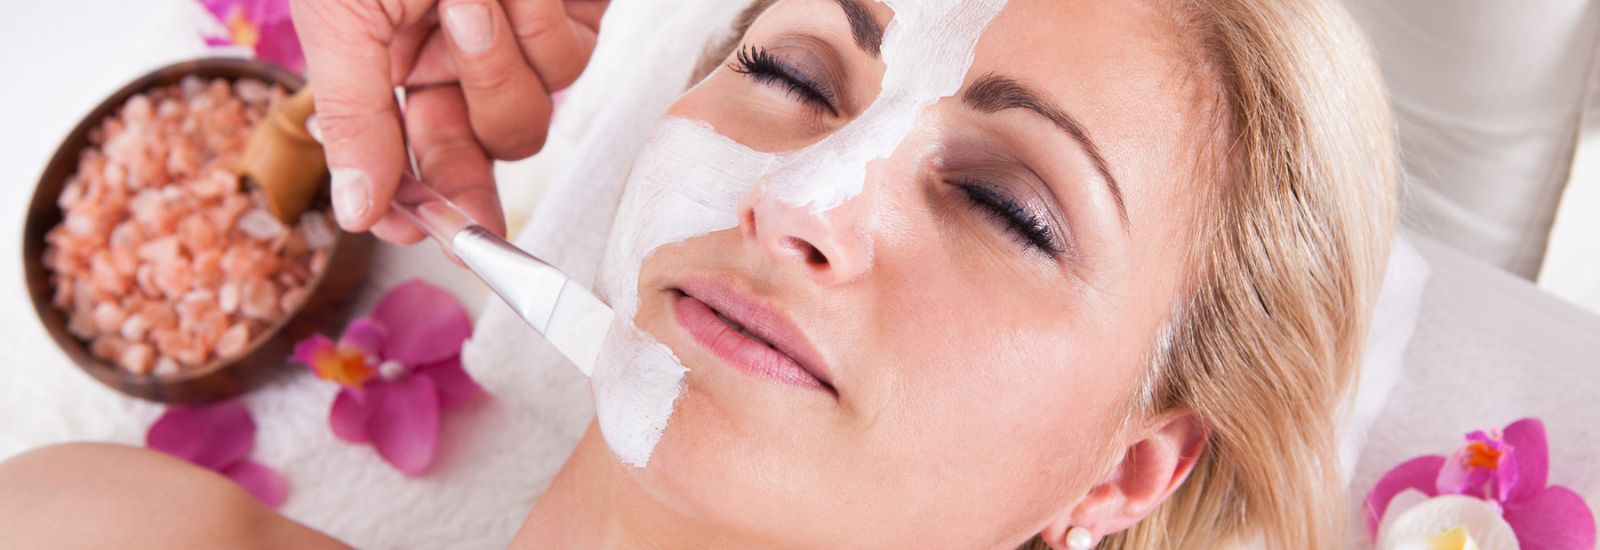 Cosmetician Applying Facial Mask or chemical peel